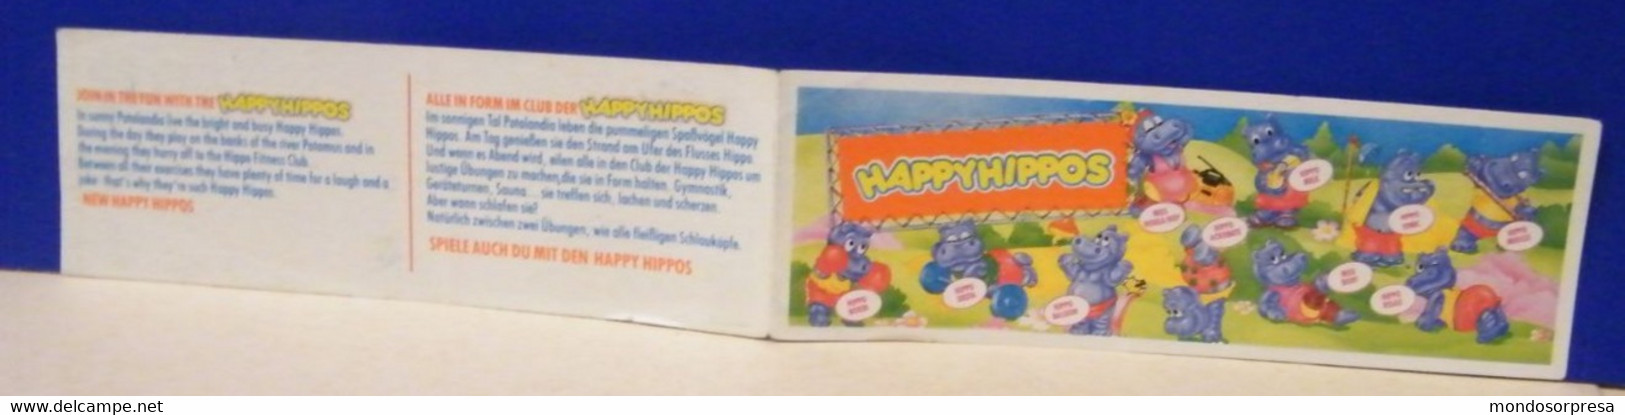 (AB111) CARTINA  KINDER FERRERO PAESI P-E-B-NL-GB-A-CH- HAPPYHIPPOS HAPPY HIPPOS HAPPYPOTAMI - Istruzioni